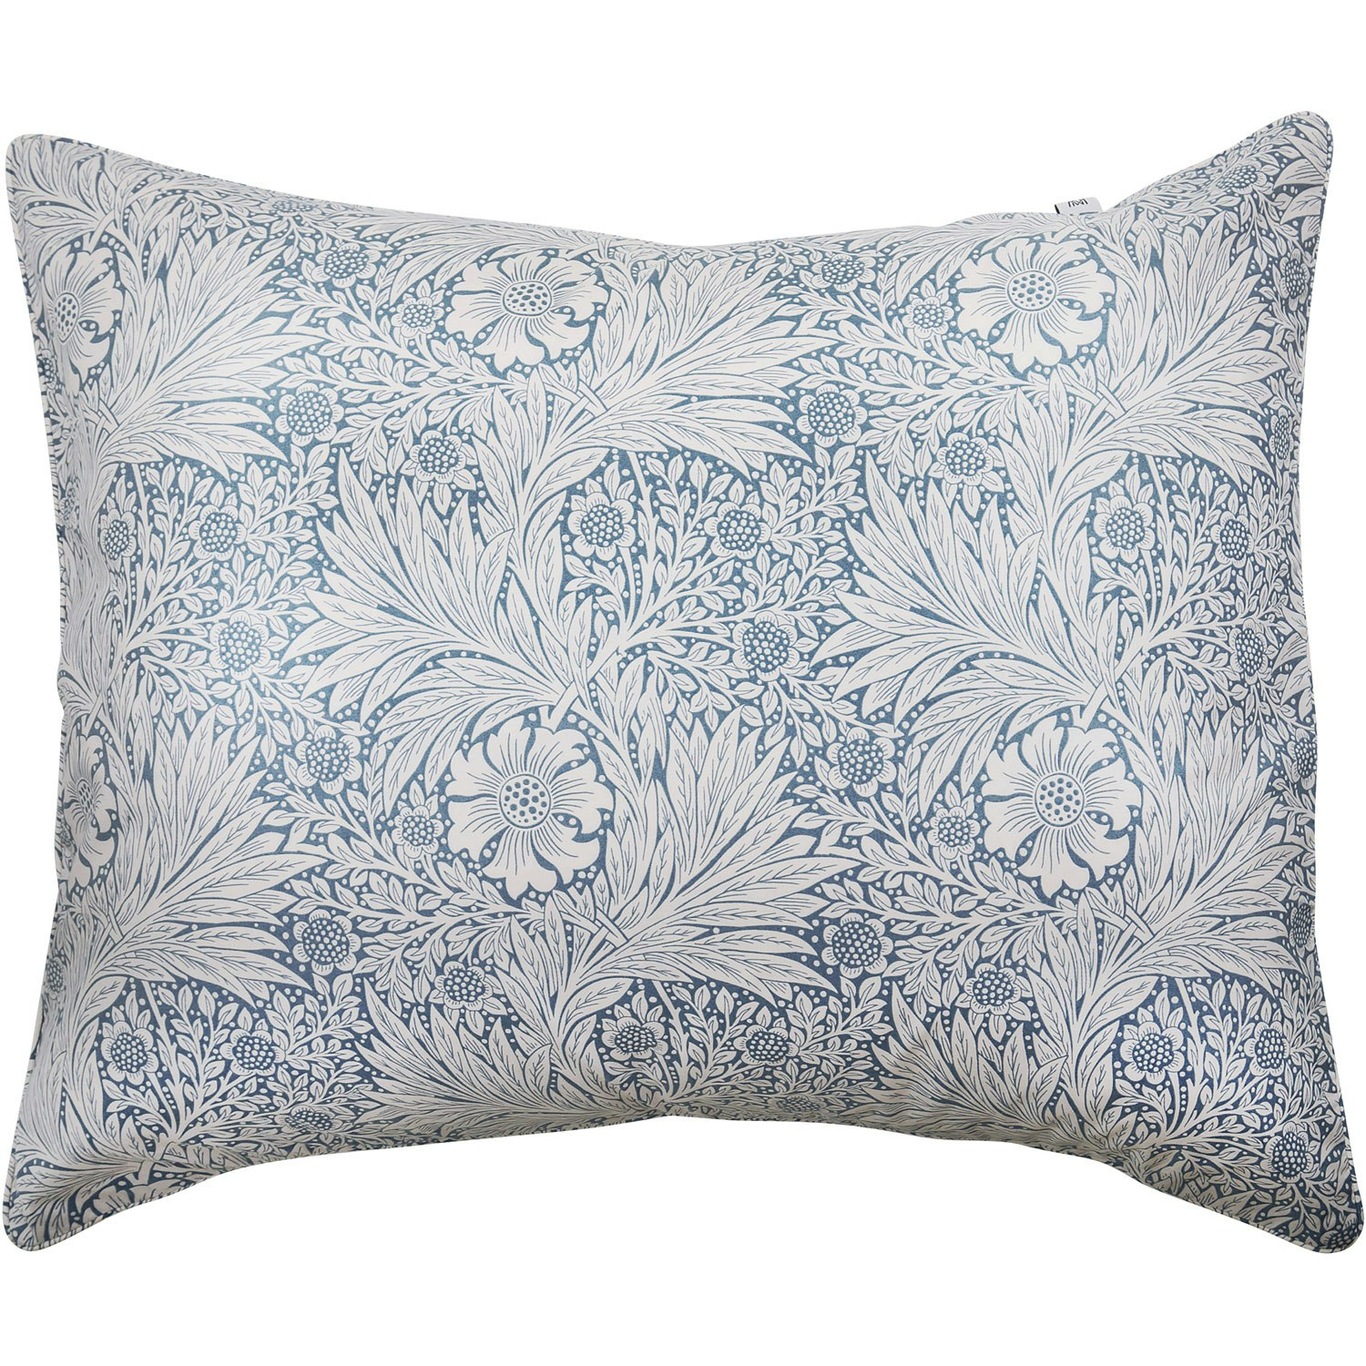 Morris & Co. Marigold Pillowcase, 60x80 cm